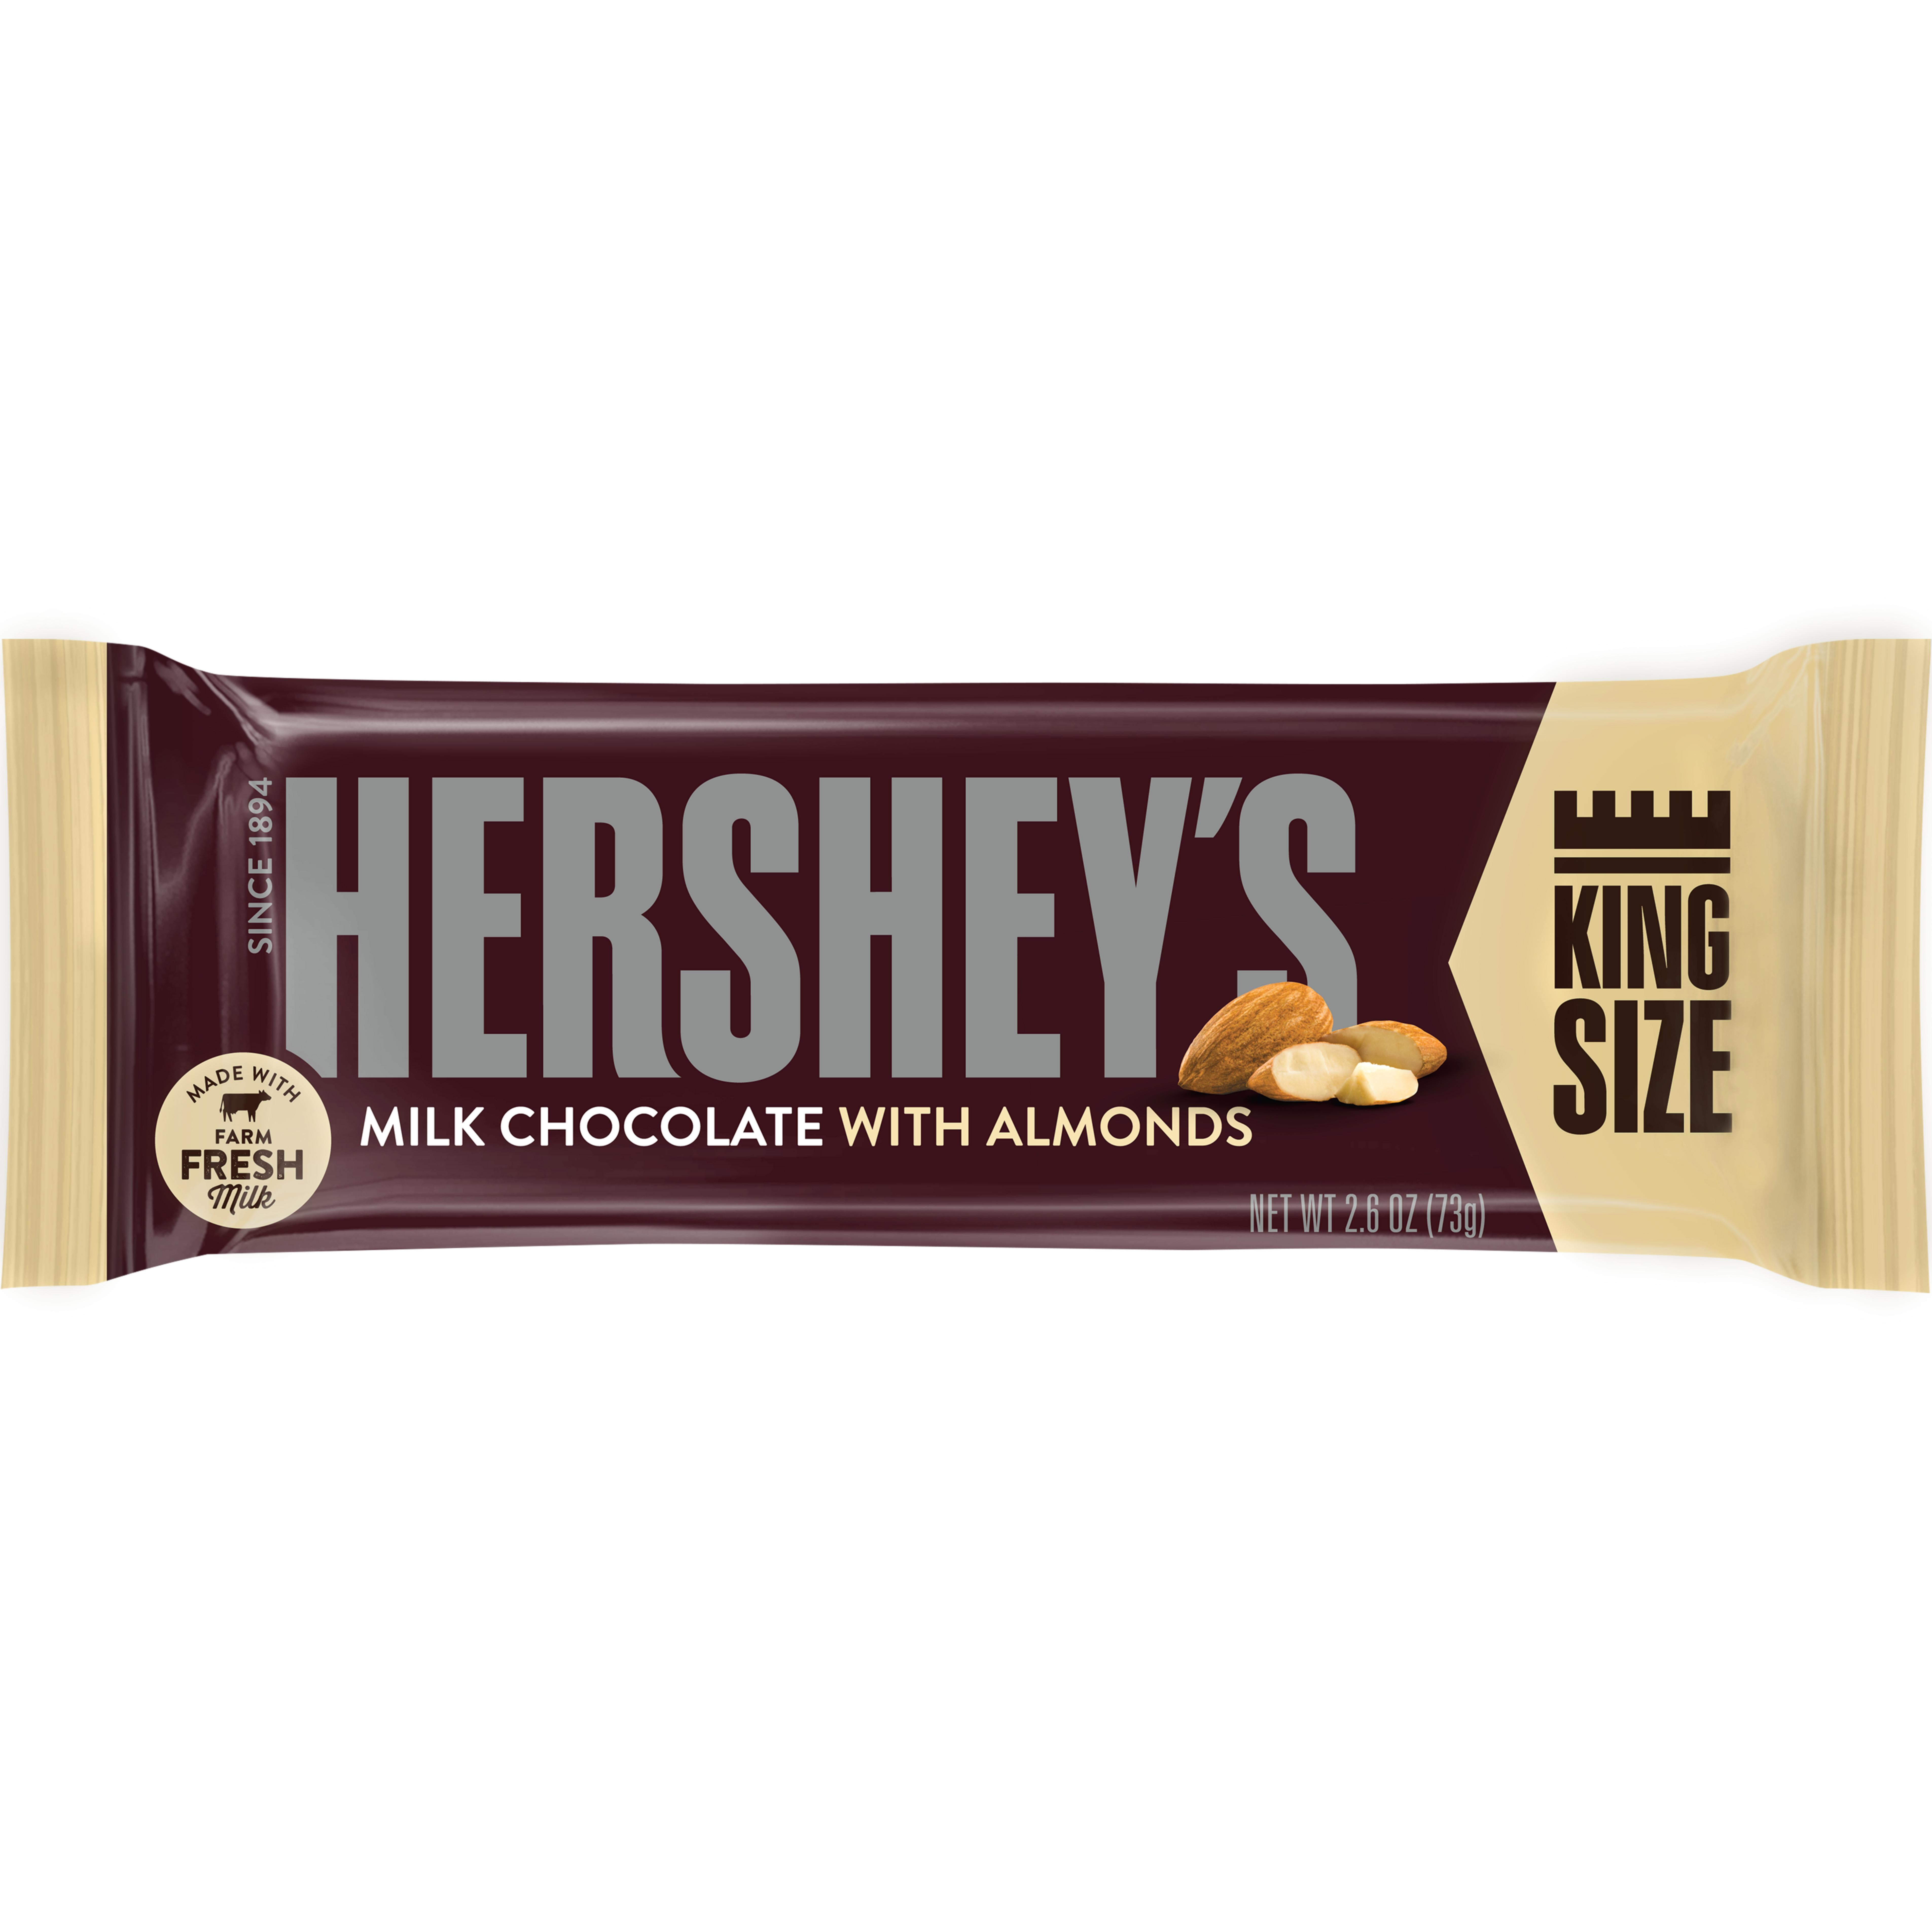 King Size шоколадка. Белый шоколад Hershey s. Mars Chocolate Almond Bar. Шоколадка Hershey's купить. Шоколад hersheys купить